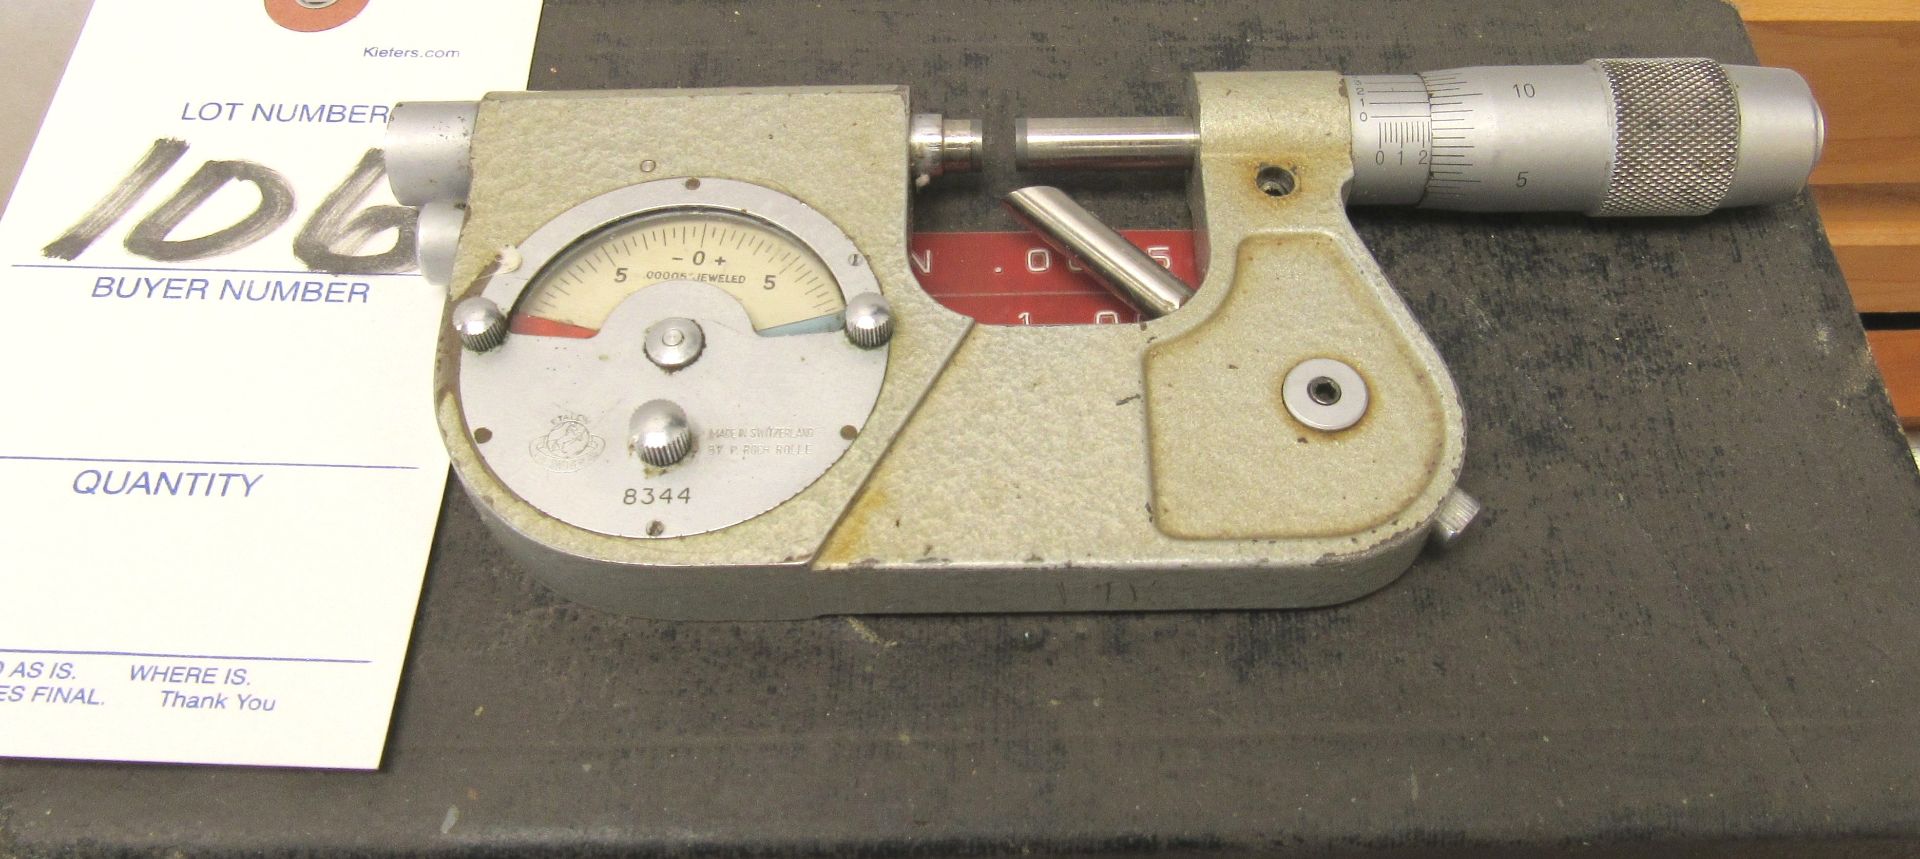 Eatalon 0-1" Indicating Micrometer